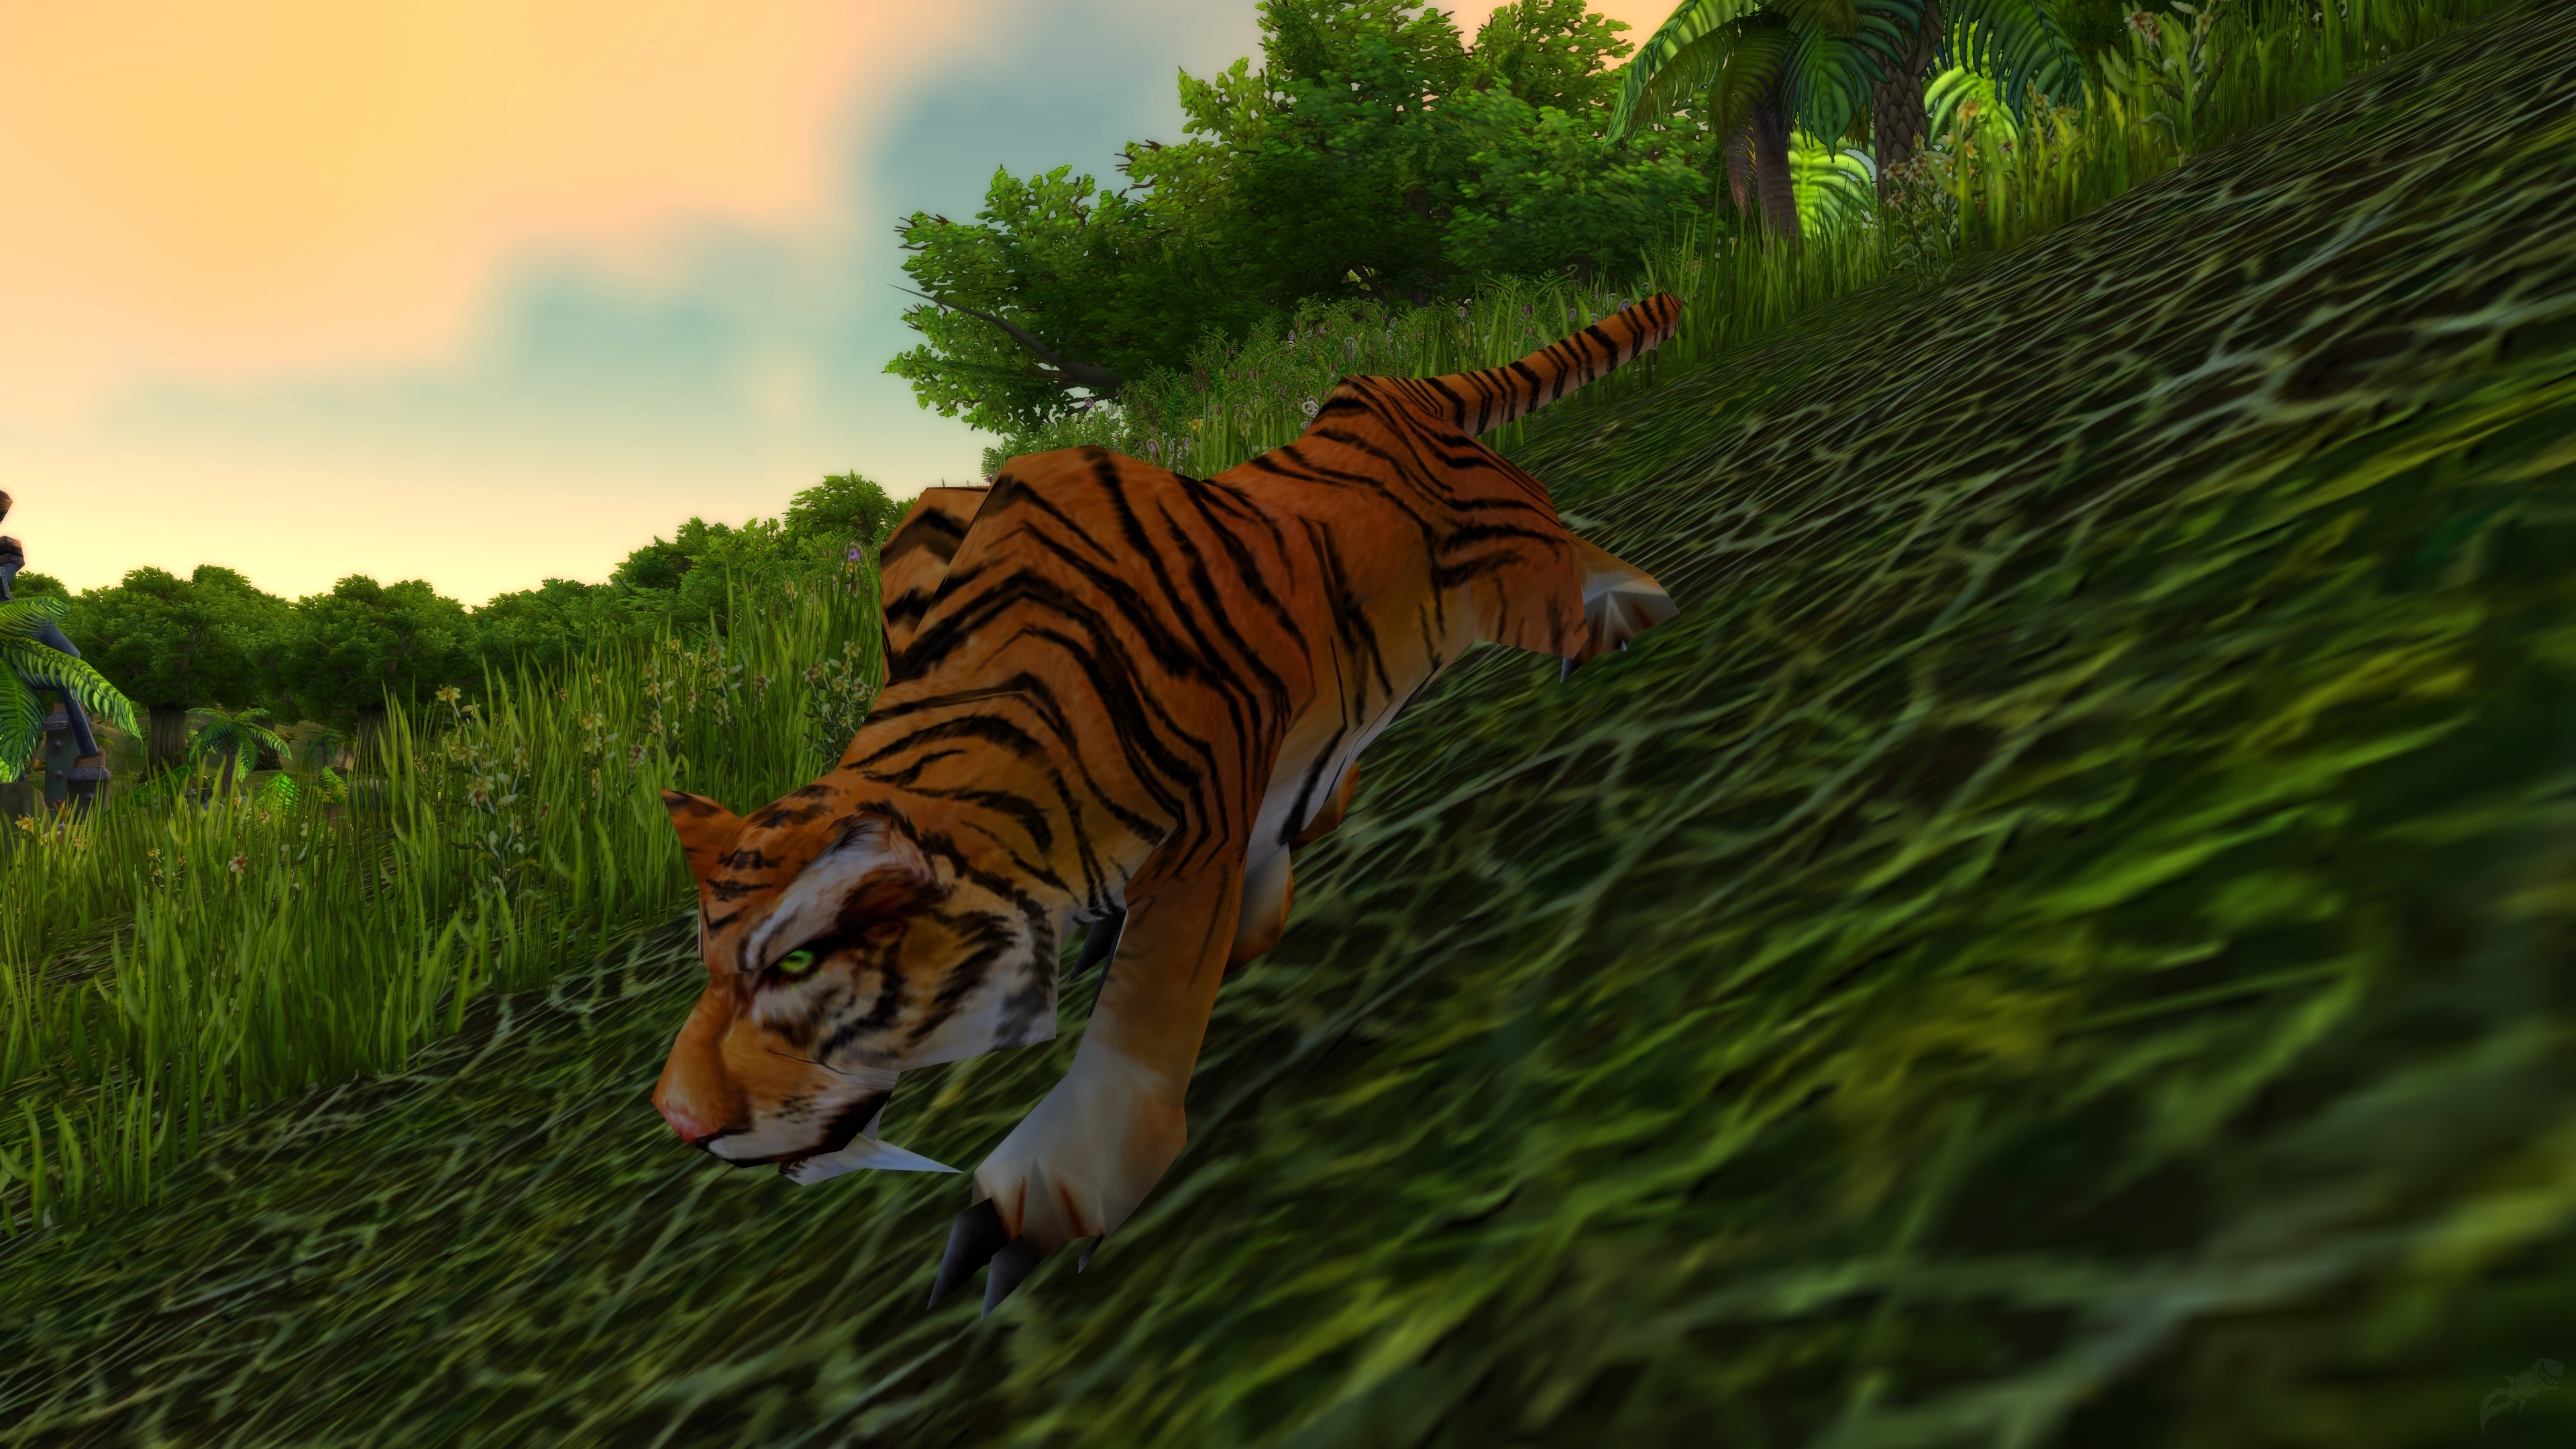 Tiger Stalking - Quest - World of Warcraft3840 x 2160